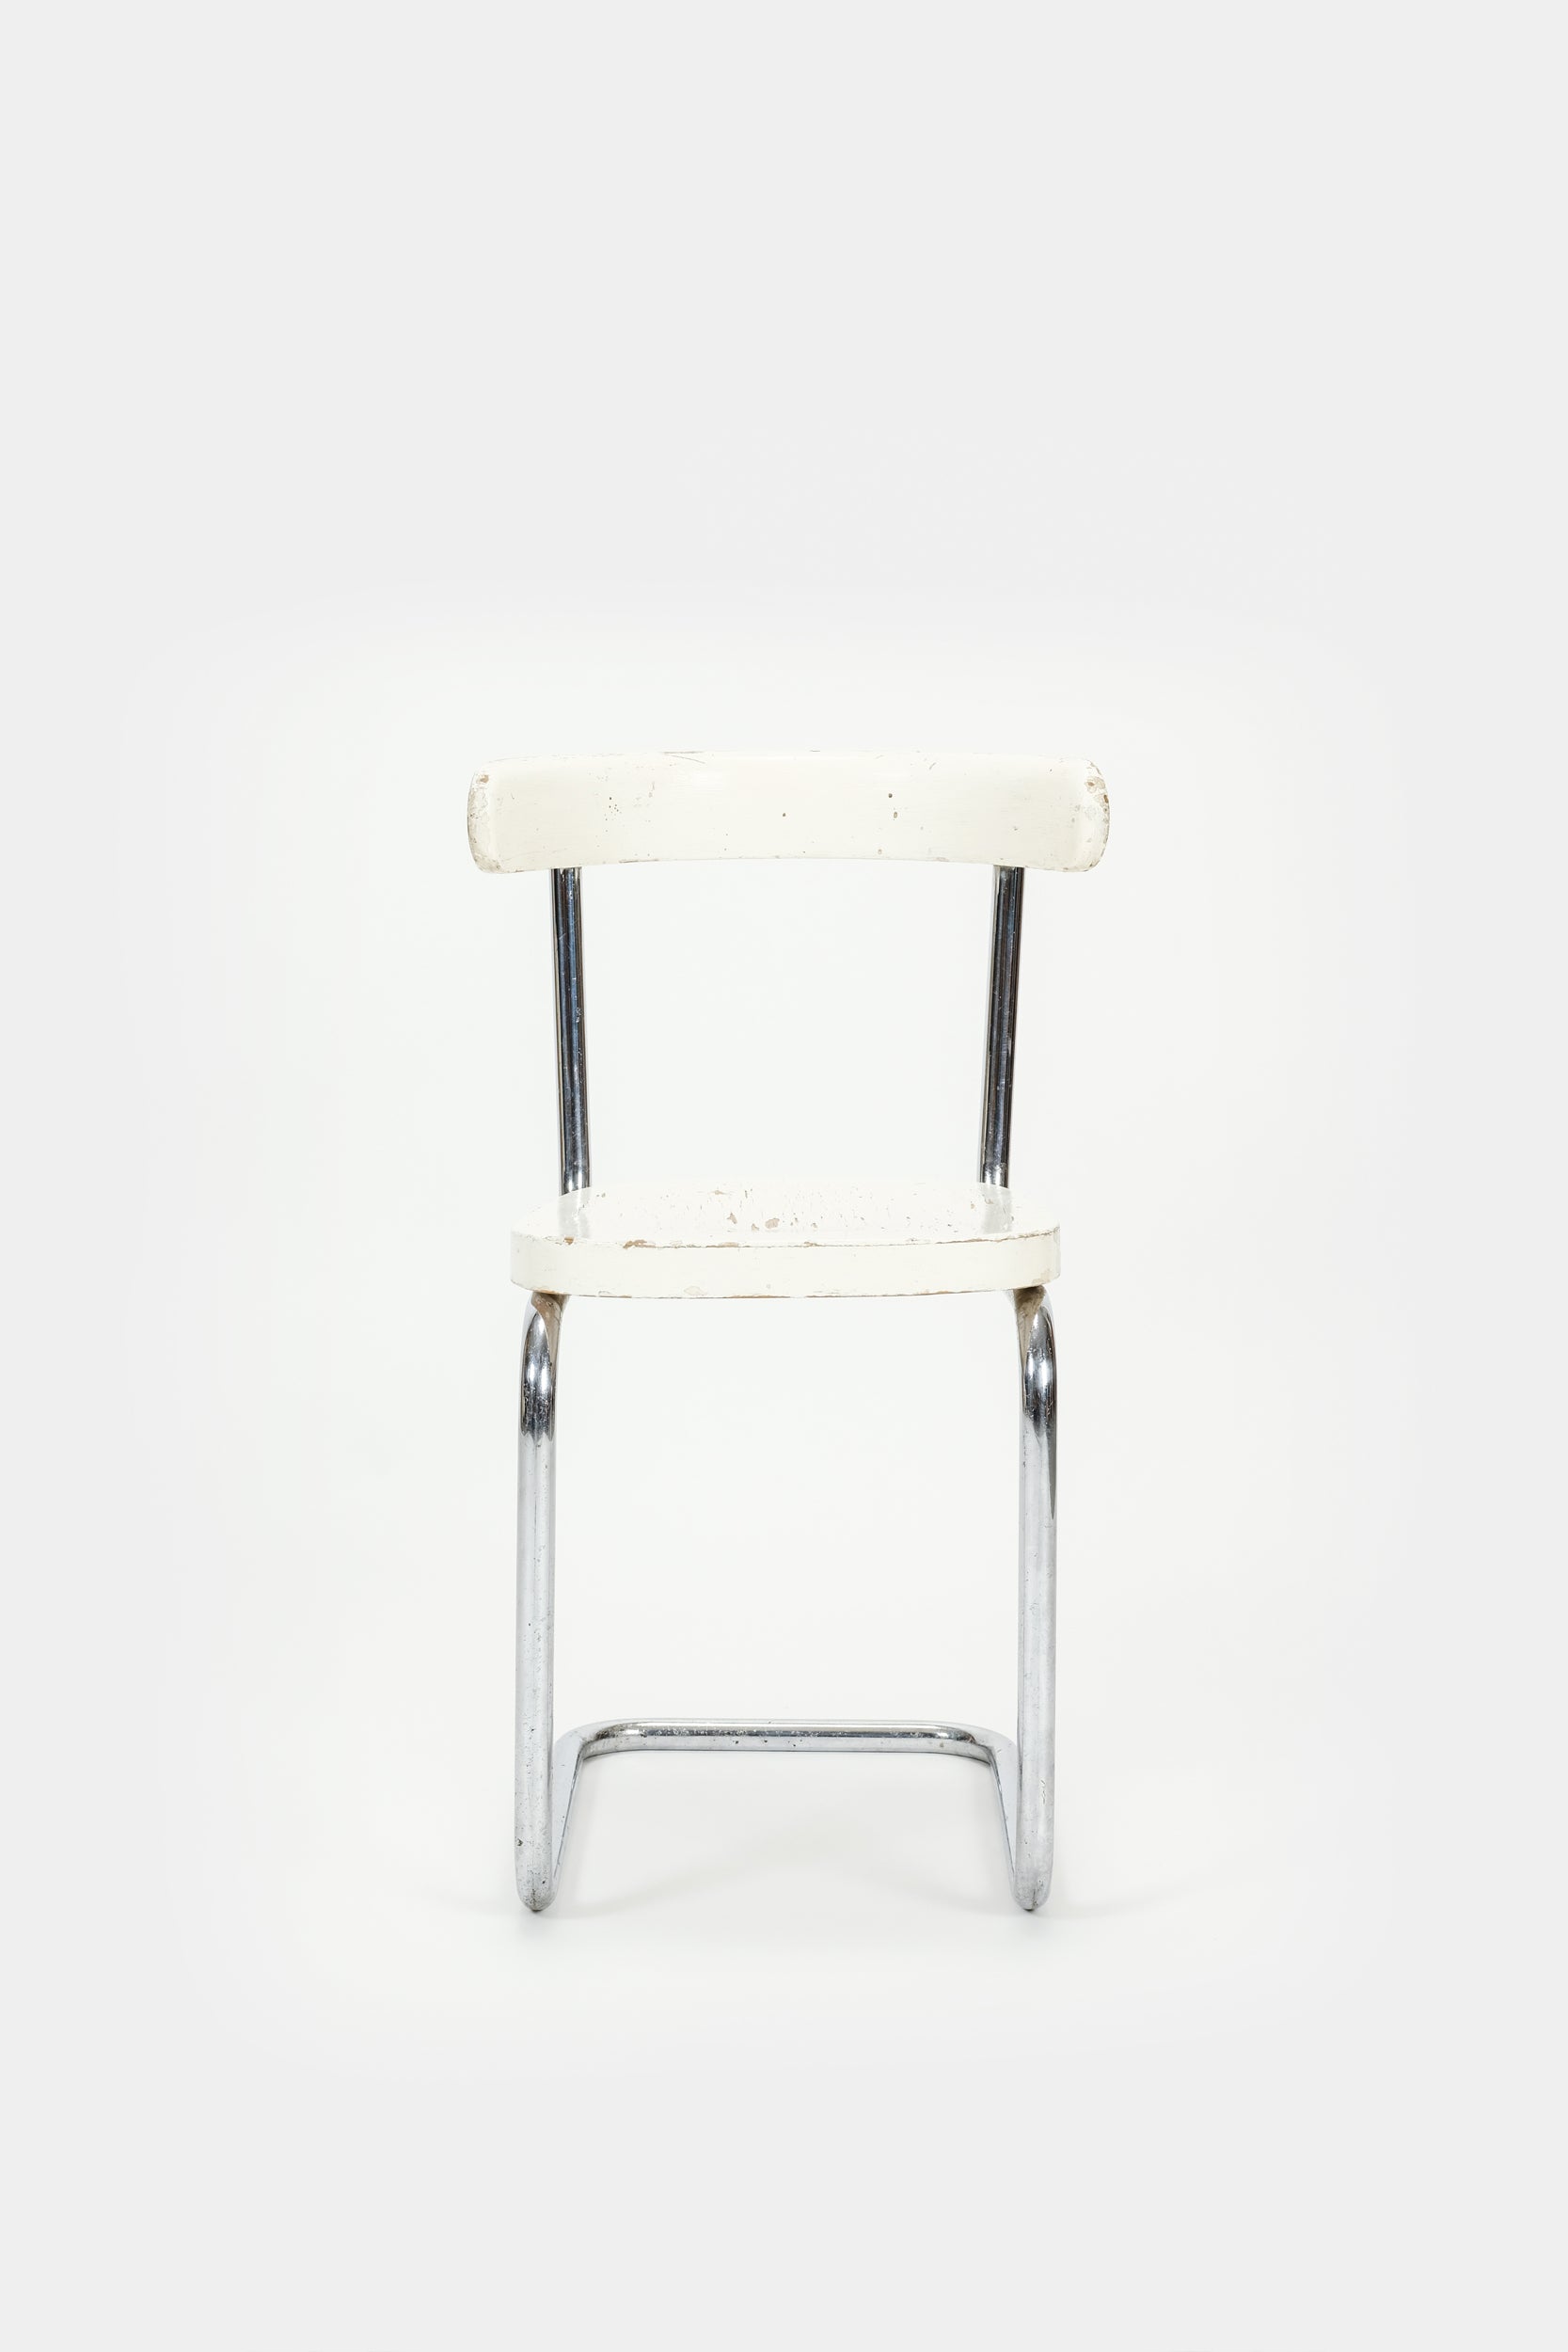 Mart Stam Thonet Chair 30s